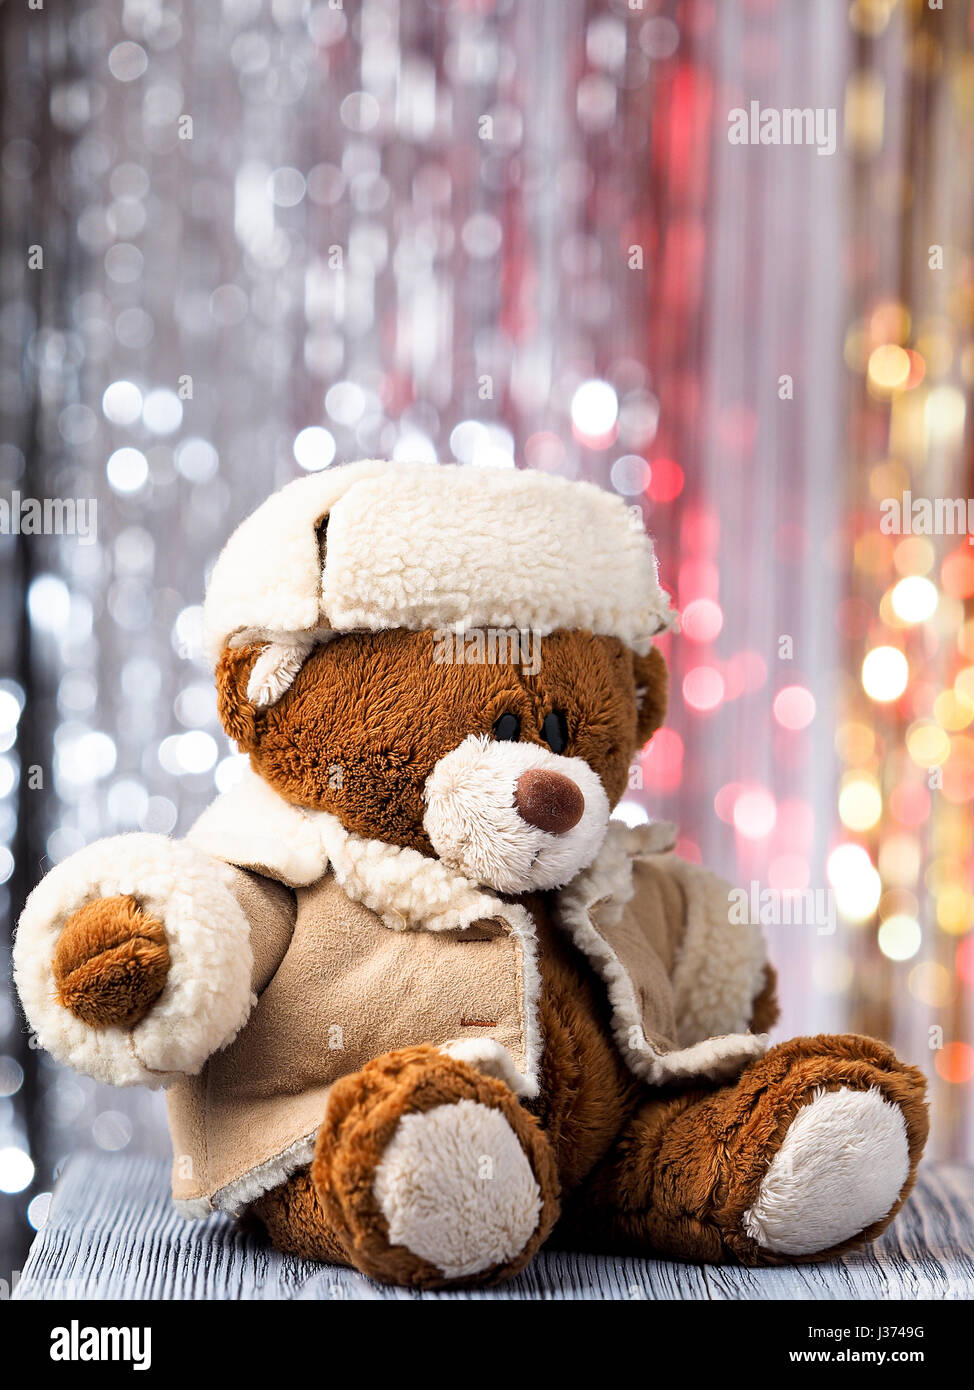 Toy teddy bear Stock Photo